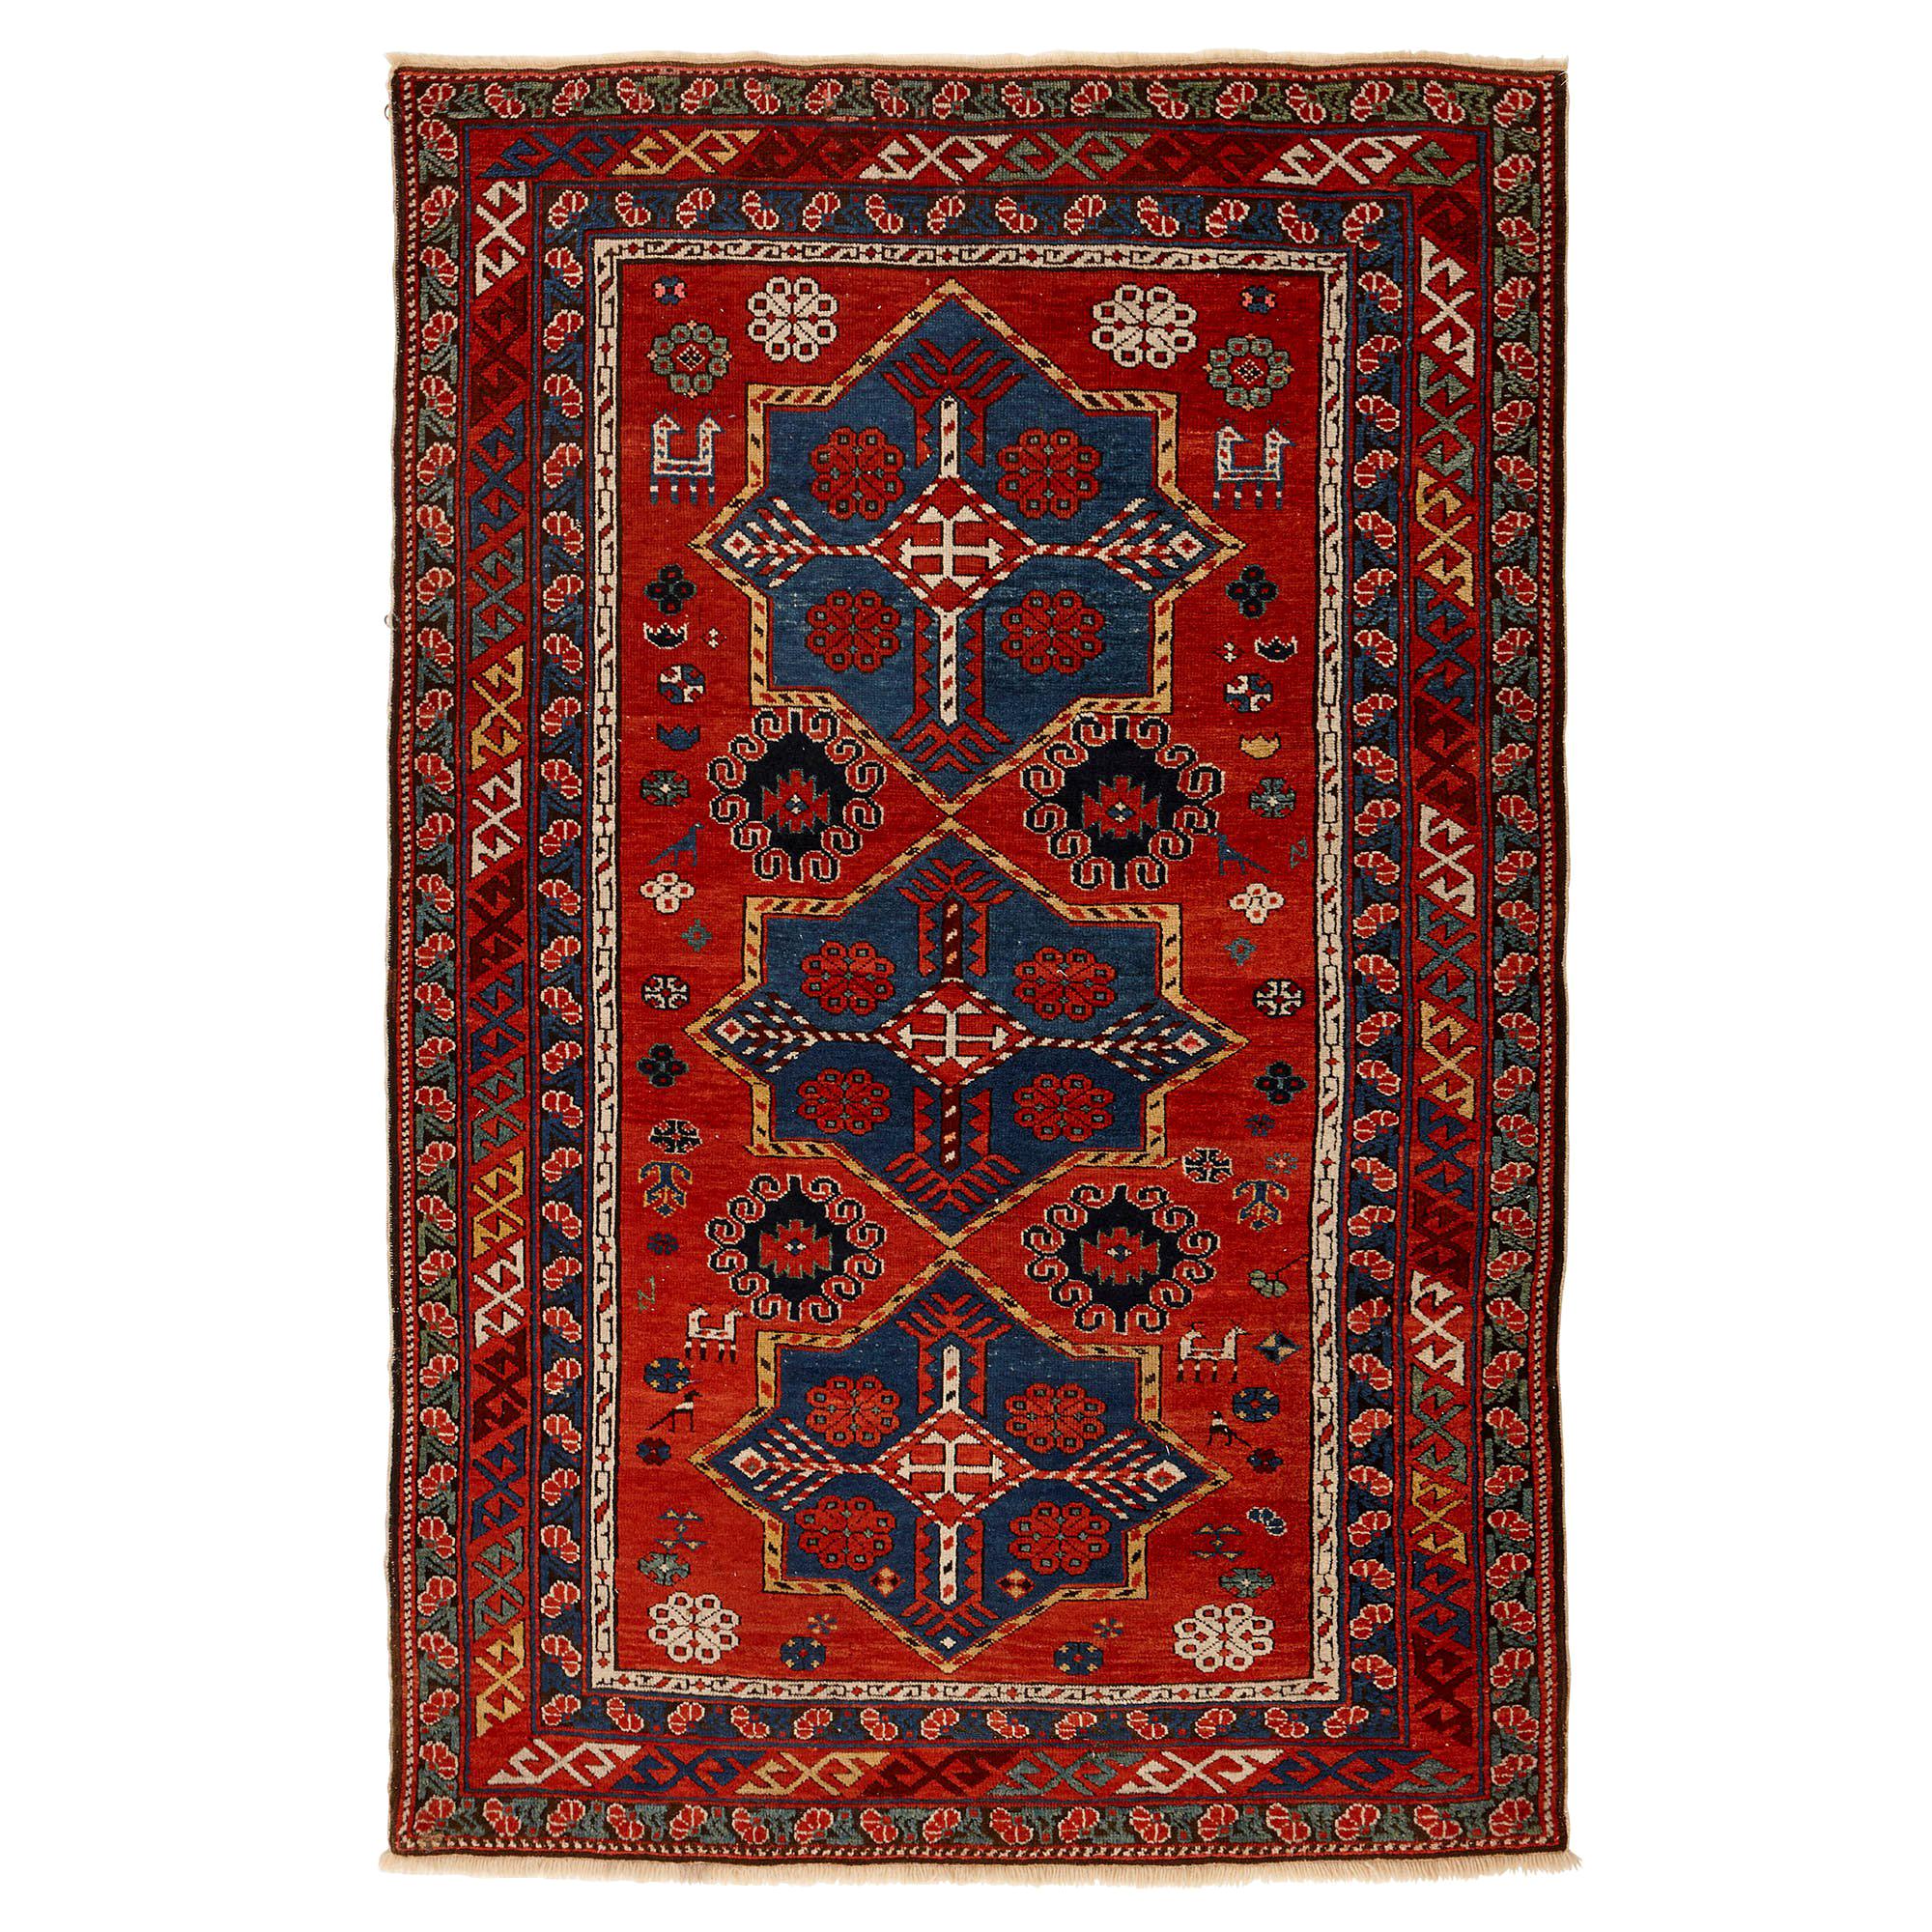 Antique Caucasian Hand-Woven Wool Rug